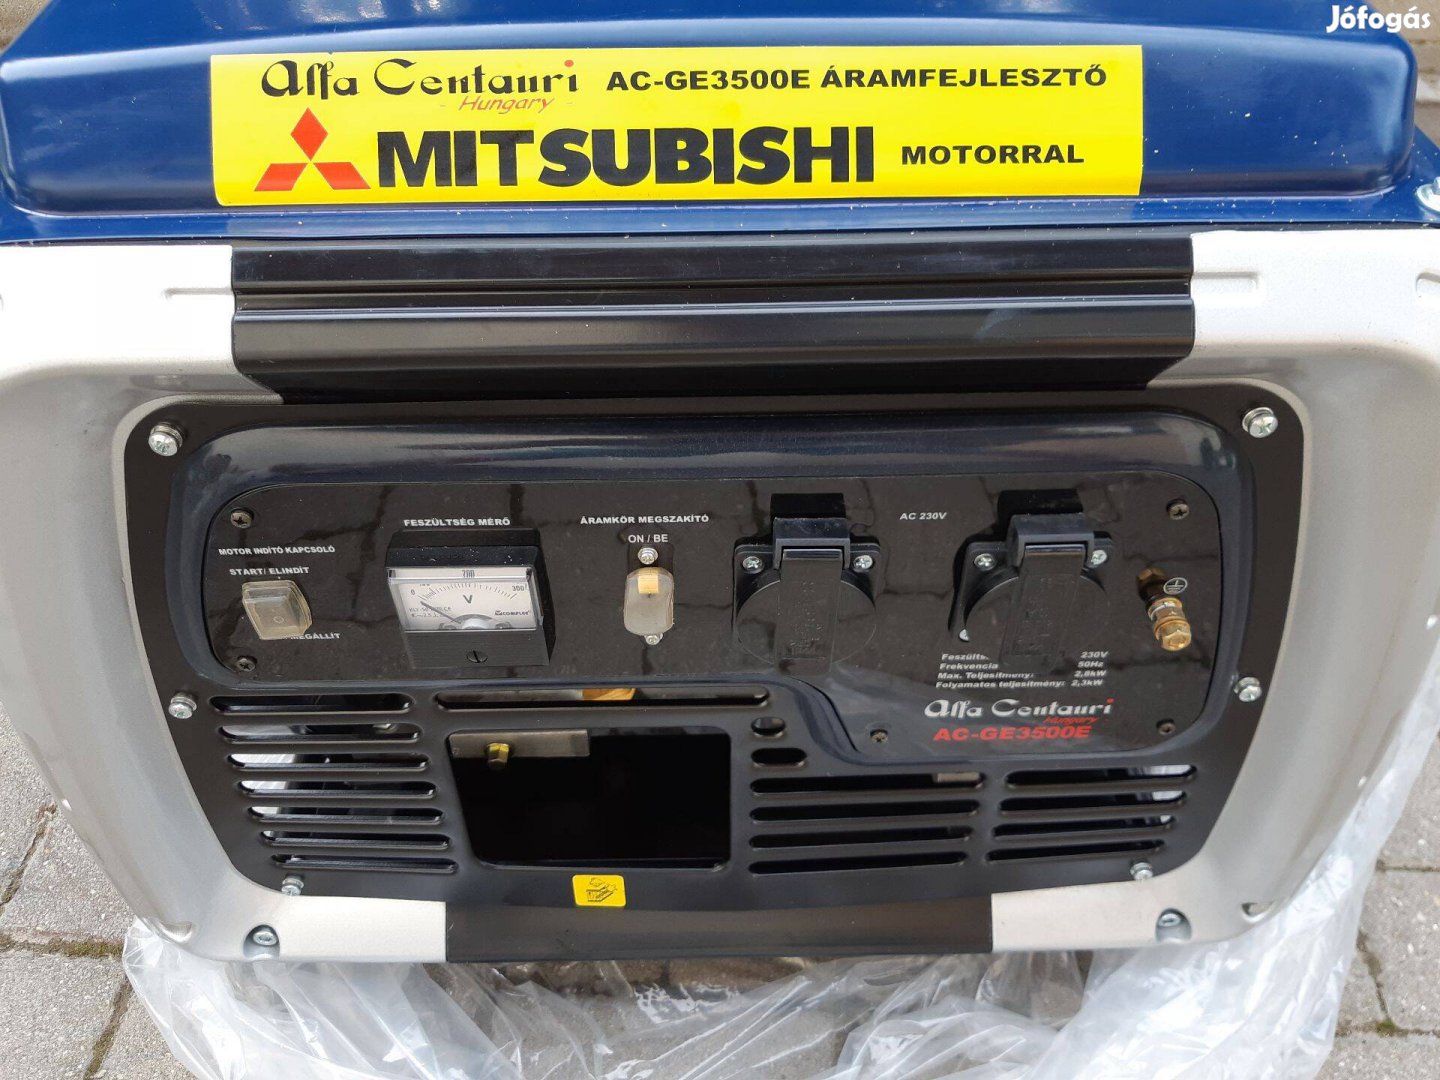 Vadiúj Mitsubishi aggregátor áramfejlesztő folyamatos 2300W, max 2800W